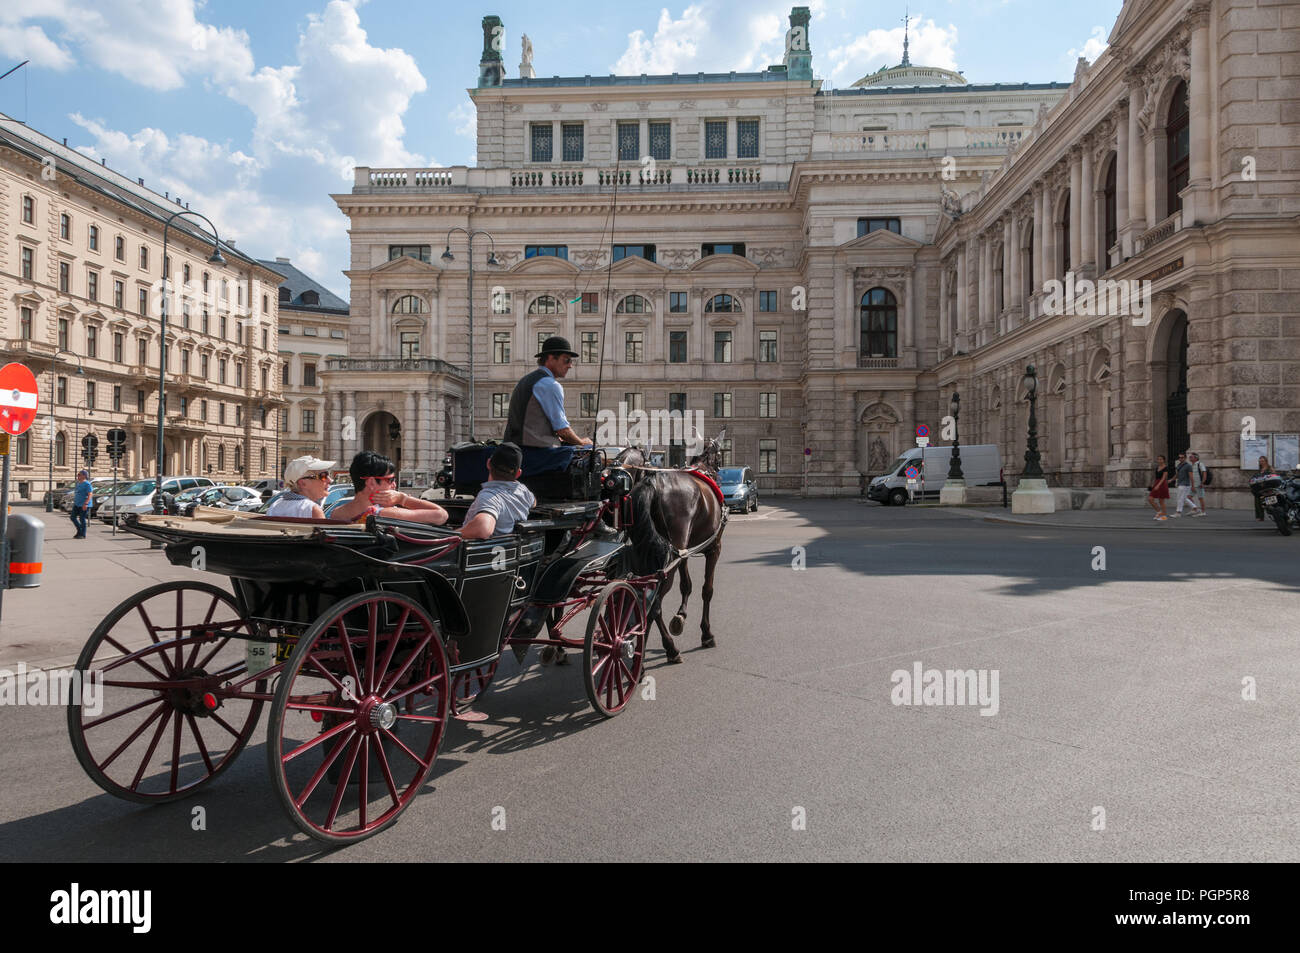 Vienna horse carriage, Vienna, Austria Stock Photo